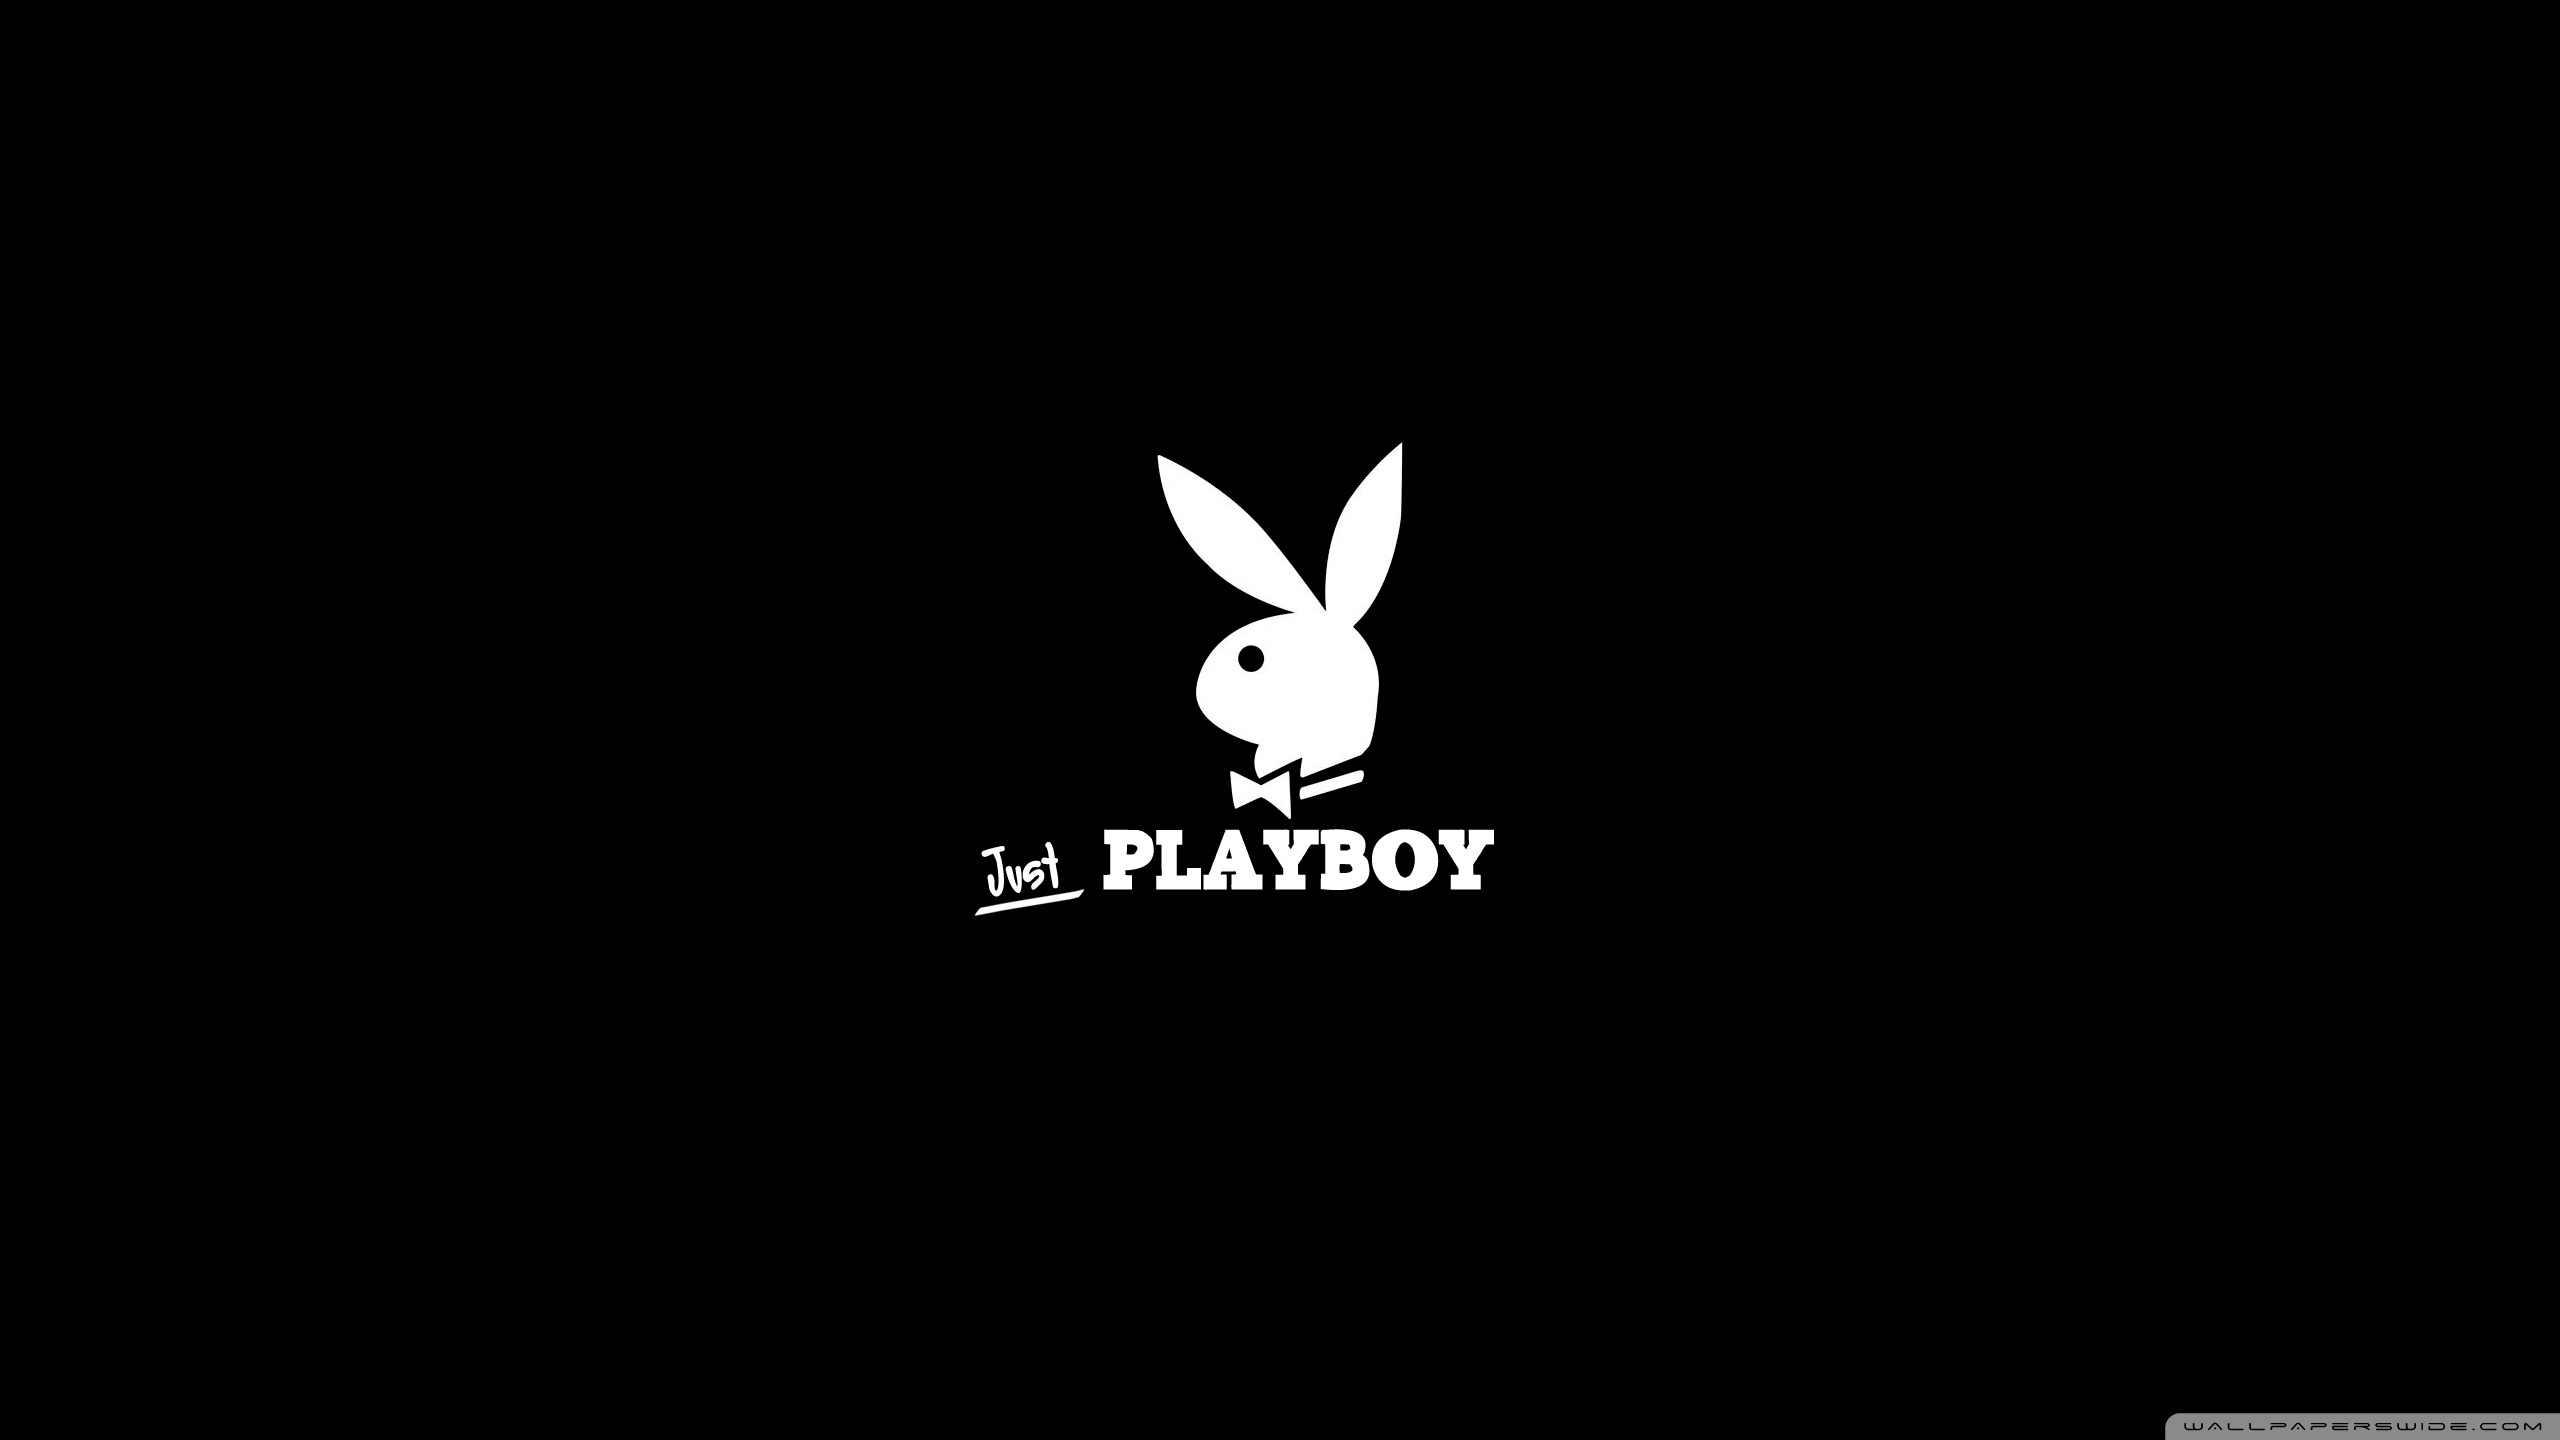 Playboy wallpaper hd